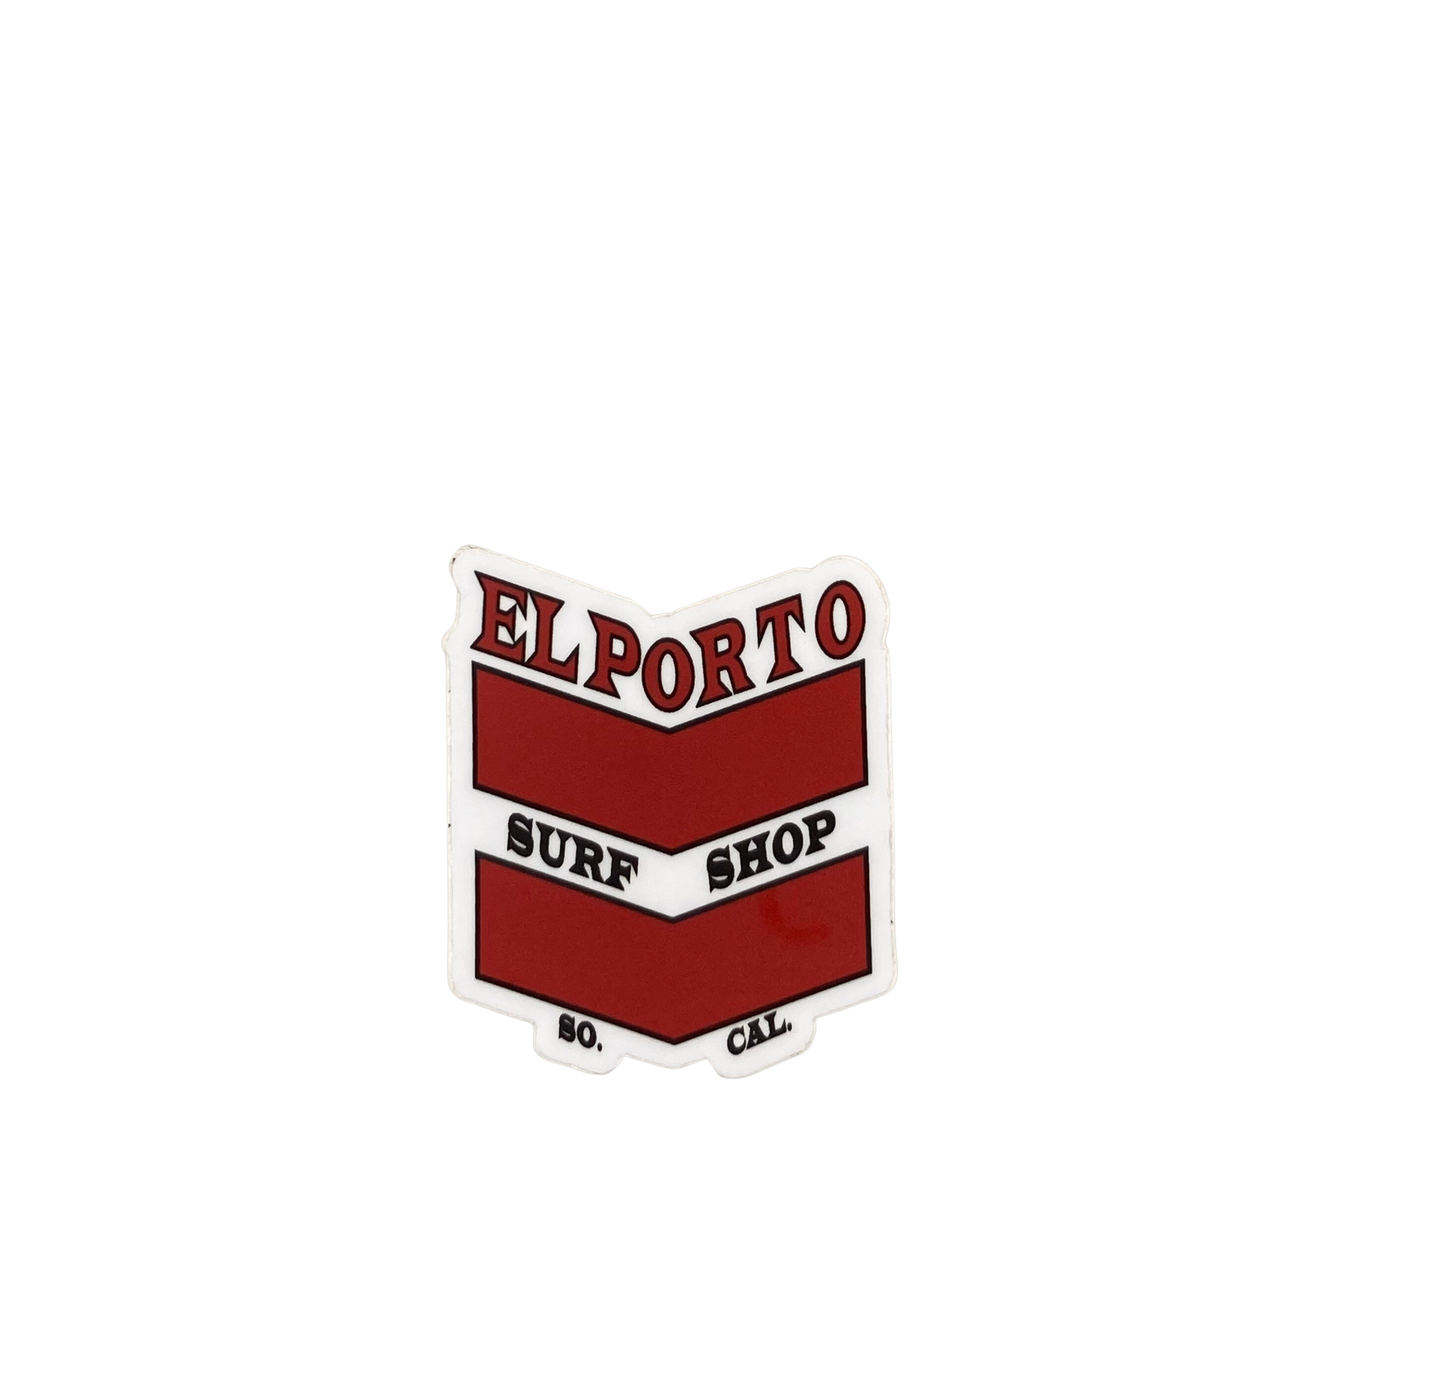 El Porto Surf Shop Sticker (red)